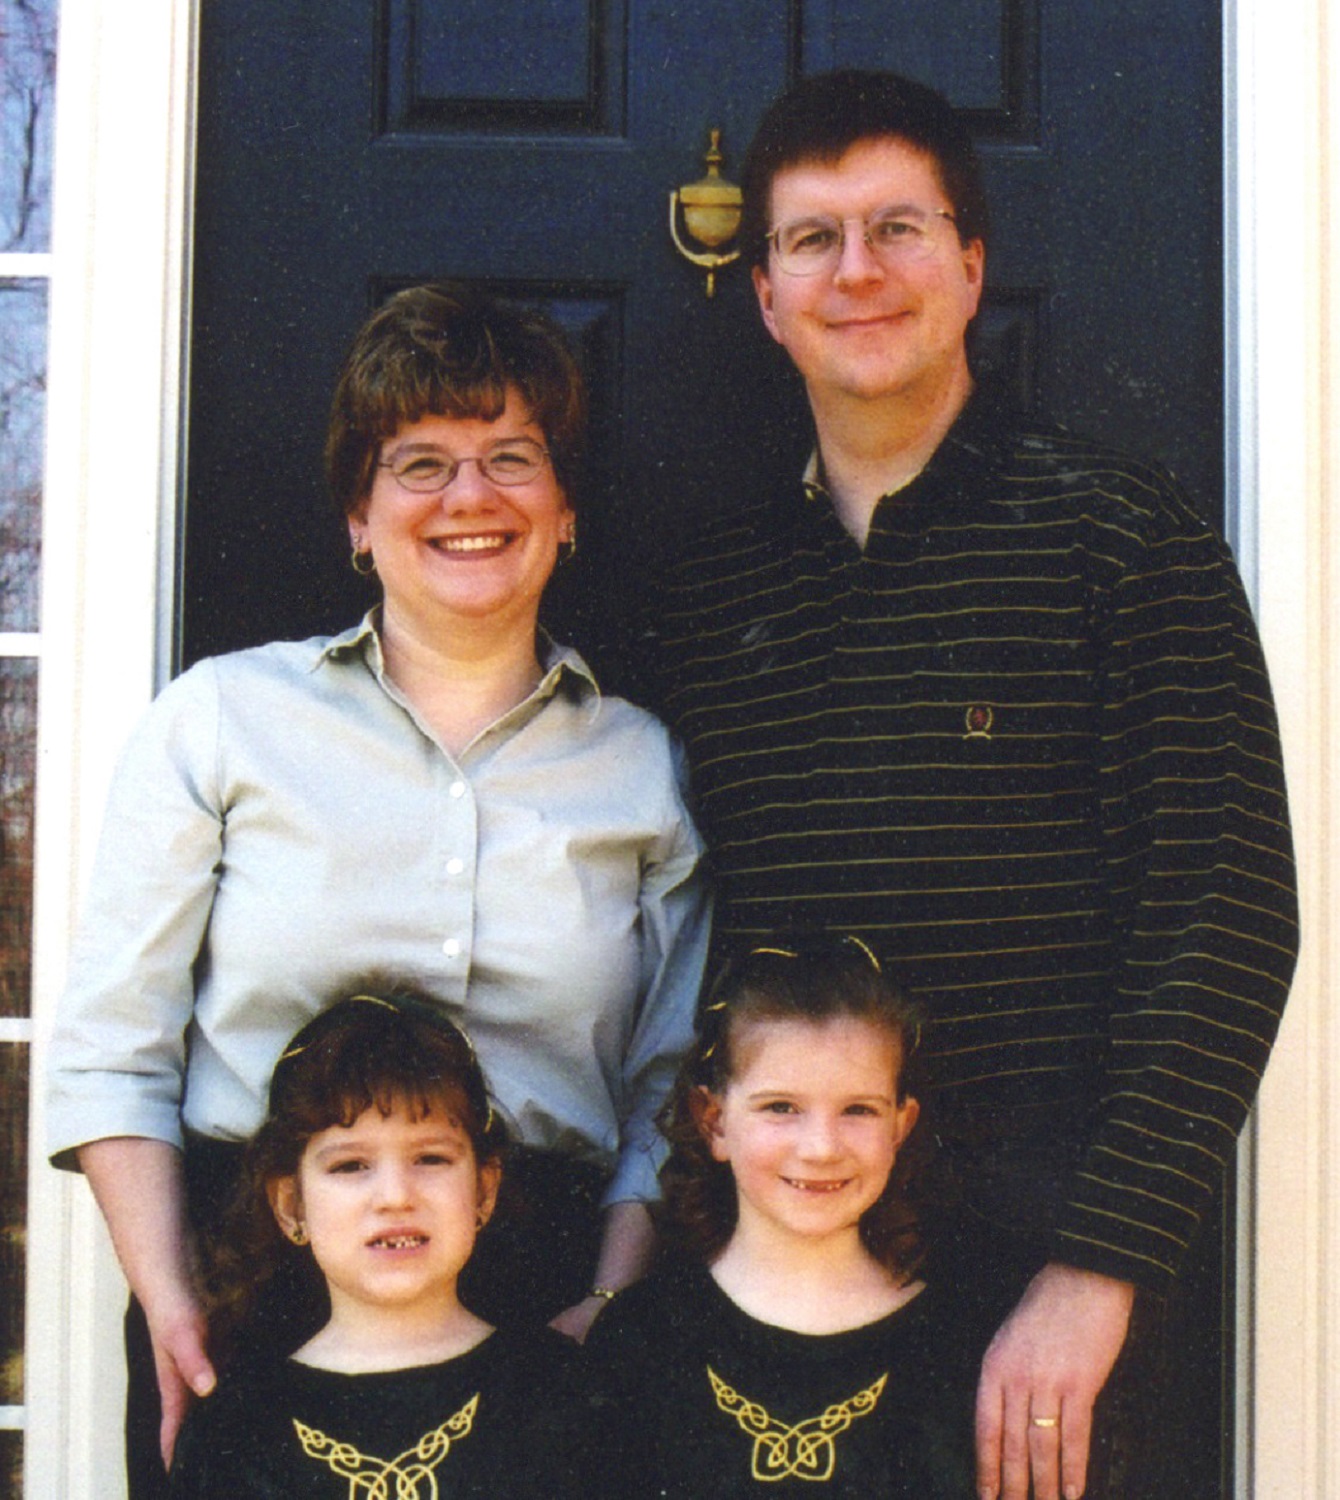 The Daniel J. Stewart Family